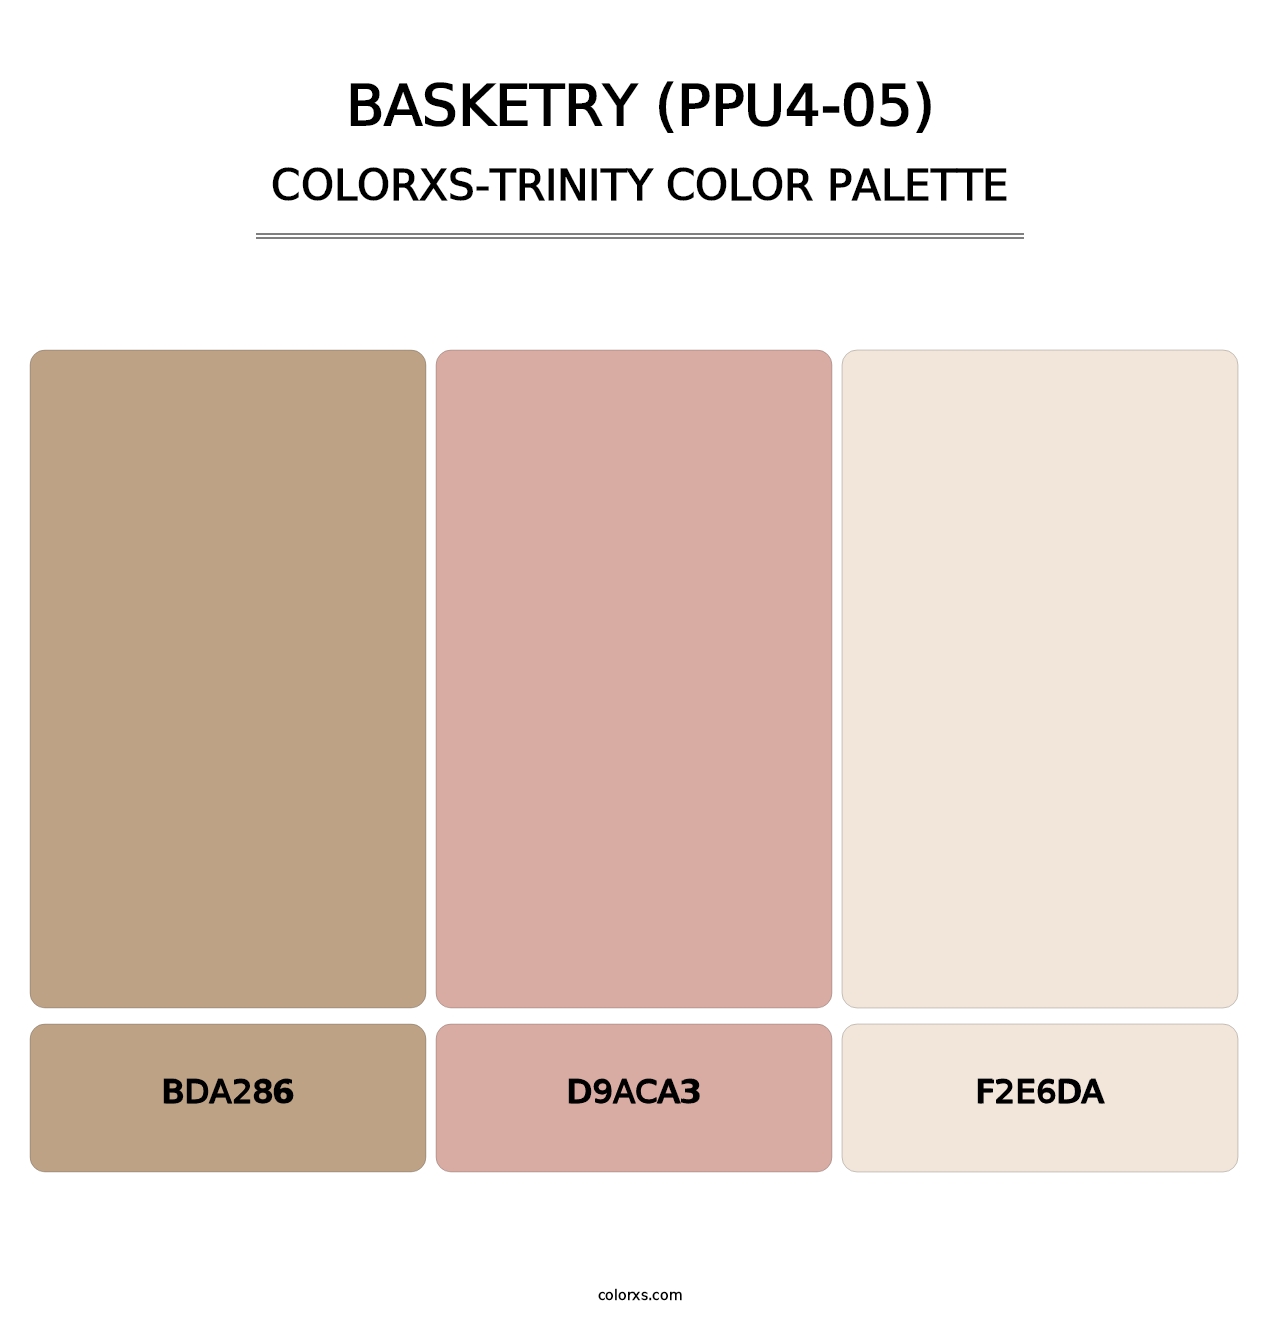 Basketry (PPU4-05) - Colorxs Trinity Palette